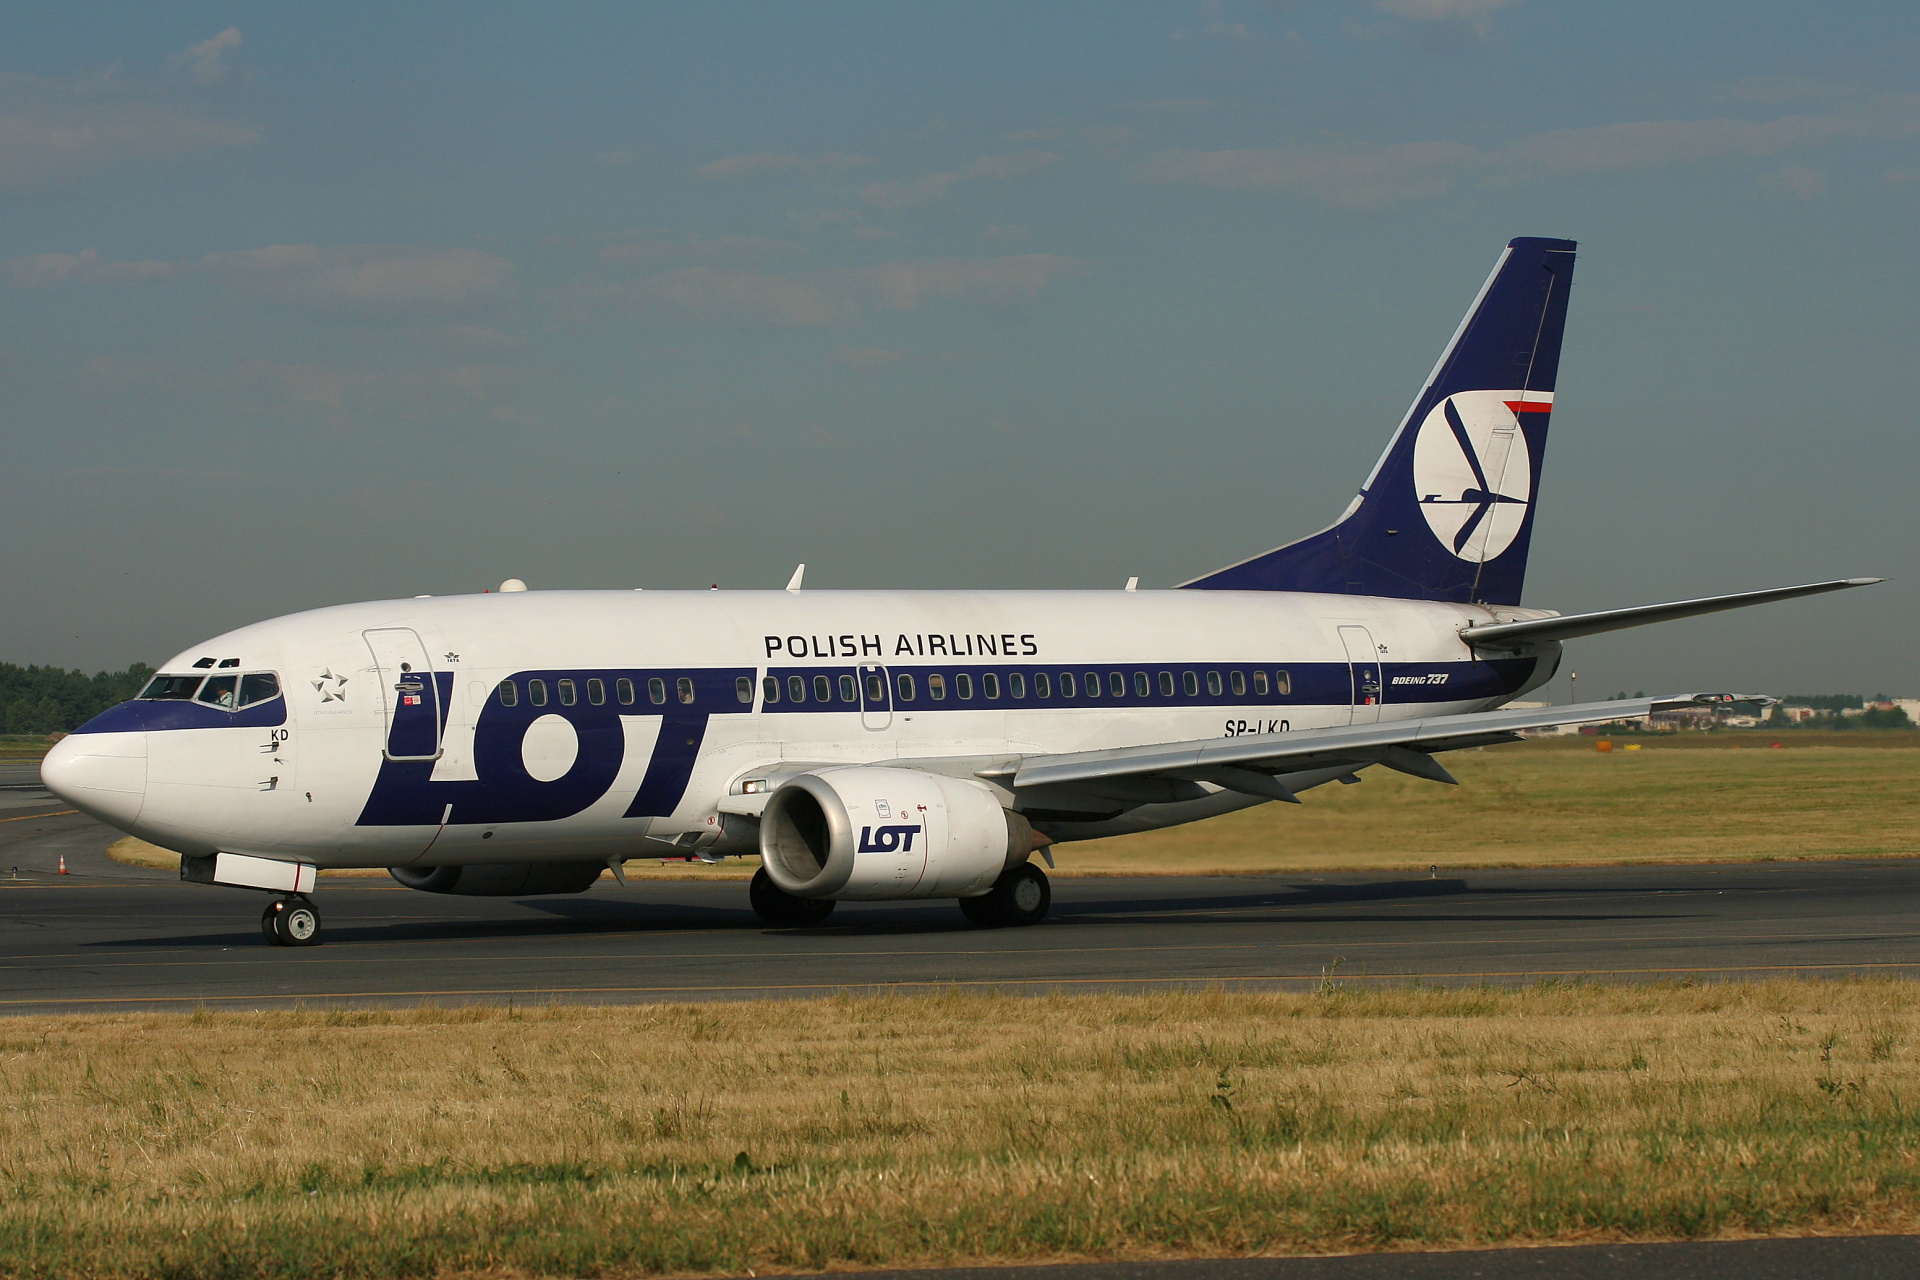 SP-LKD (Aircraft » EPWA Spotting » Boeing 737-500 » LOT Polish Airlines)